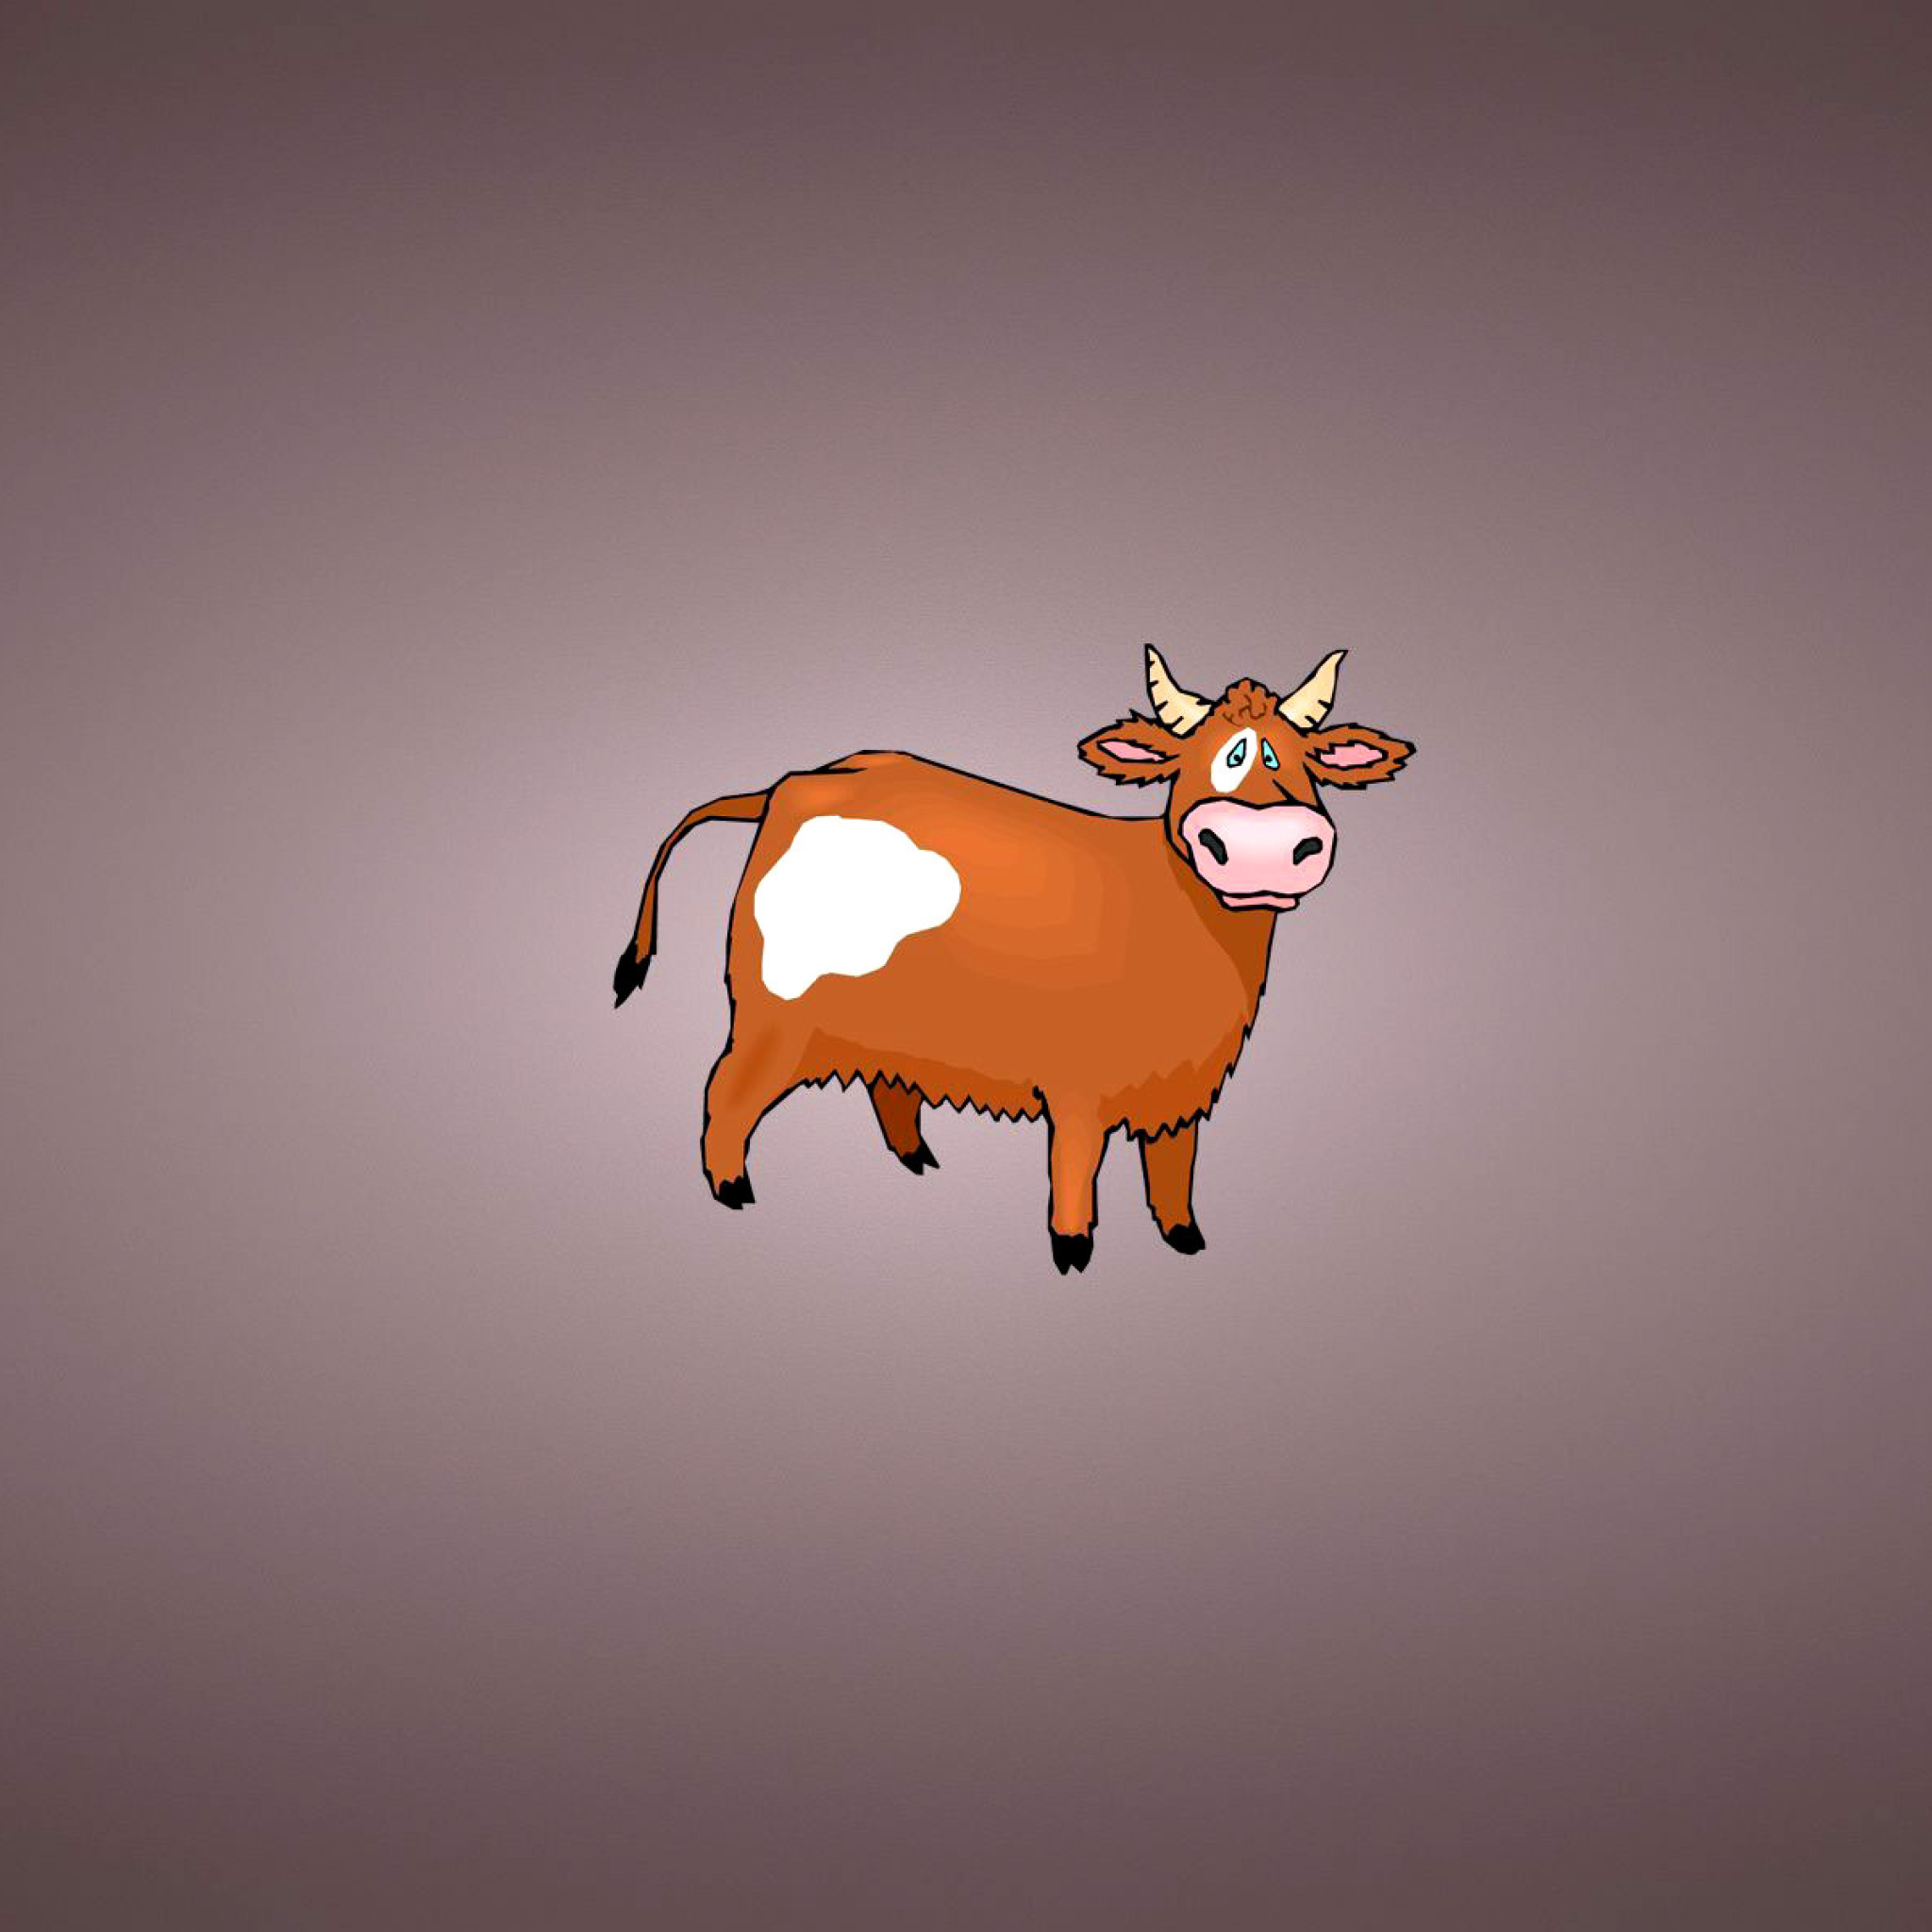 Funny Cow wallpaper 2048x2048